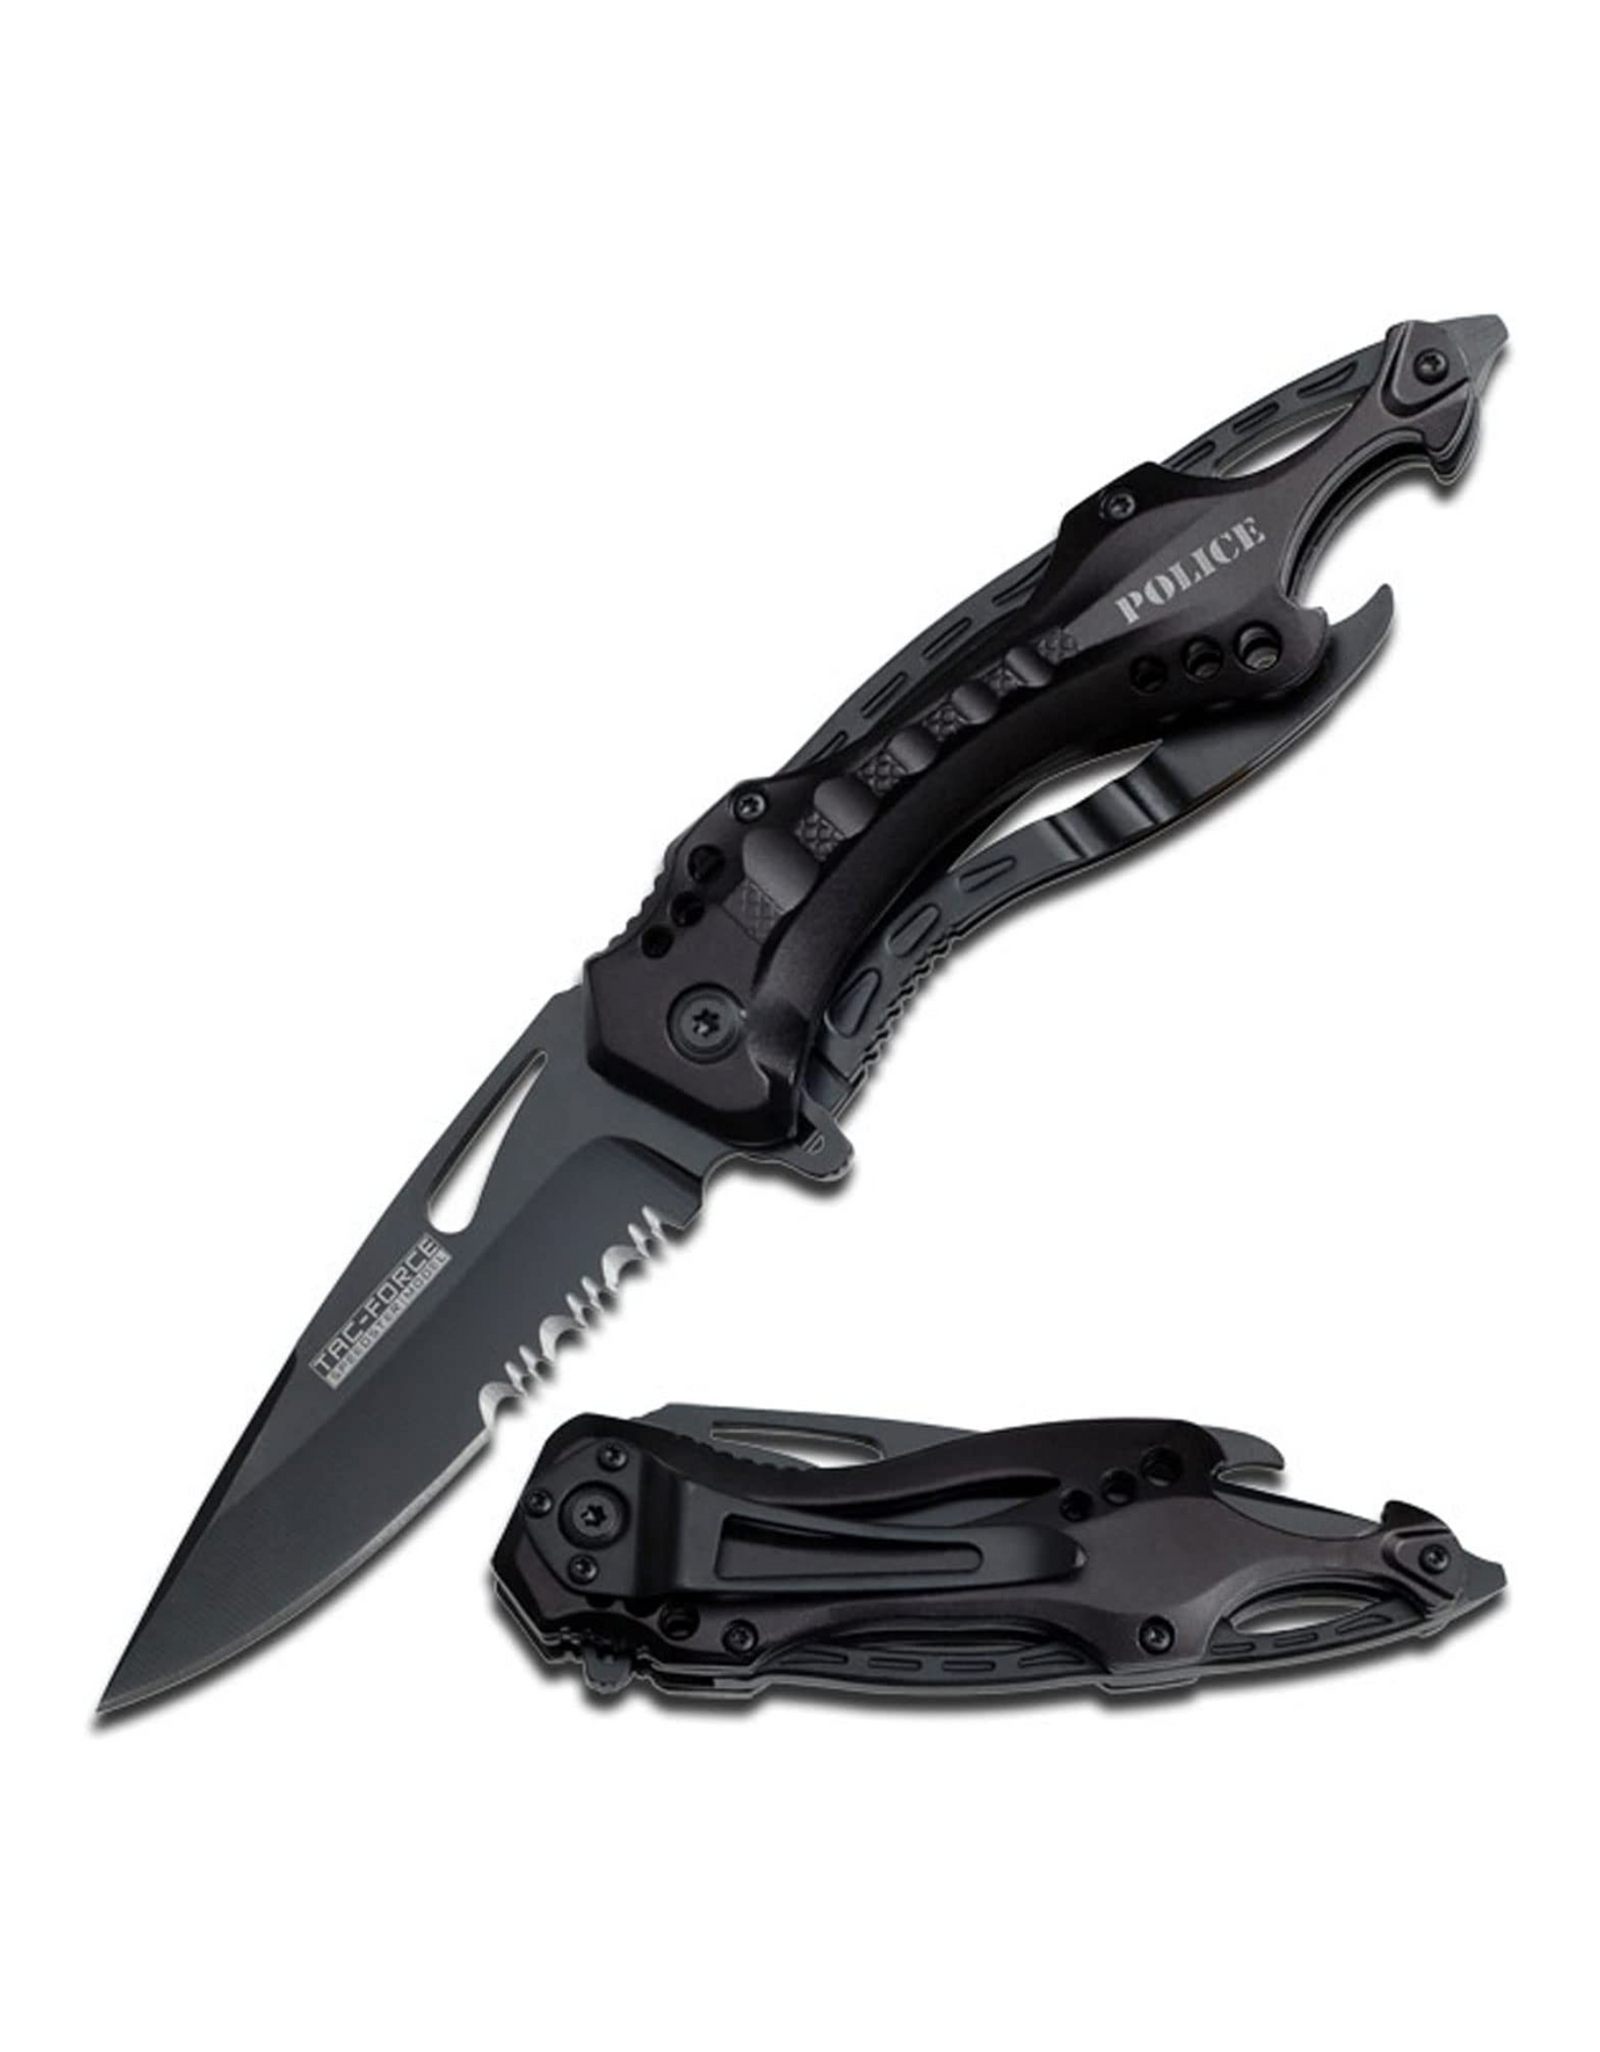 TAC Force- Spring Assisted Folding Pocket Knife, Black Stainless Steel Blade with Black Aluminum Handle, 3.25" Blade